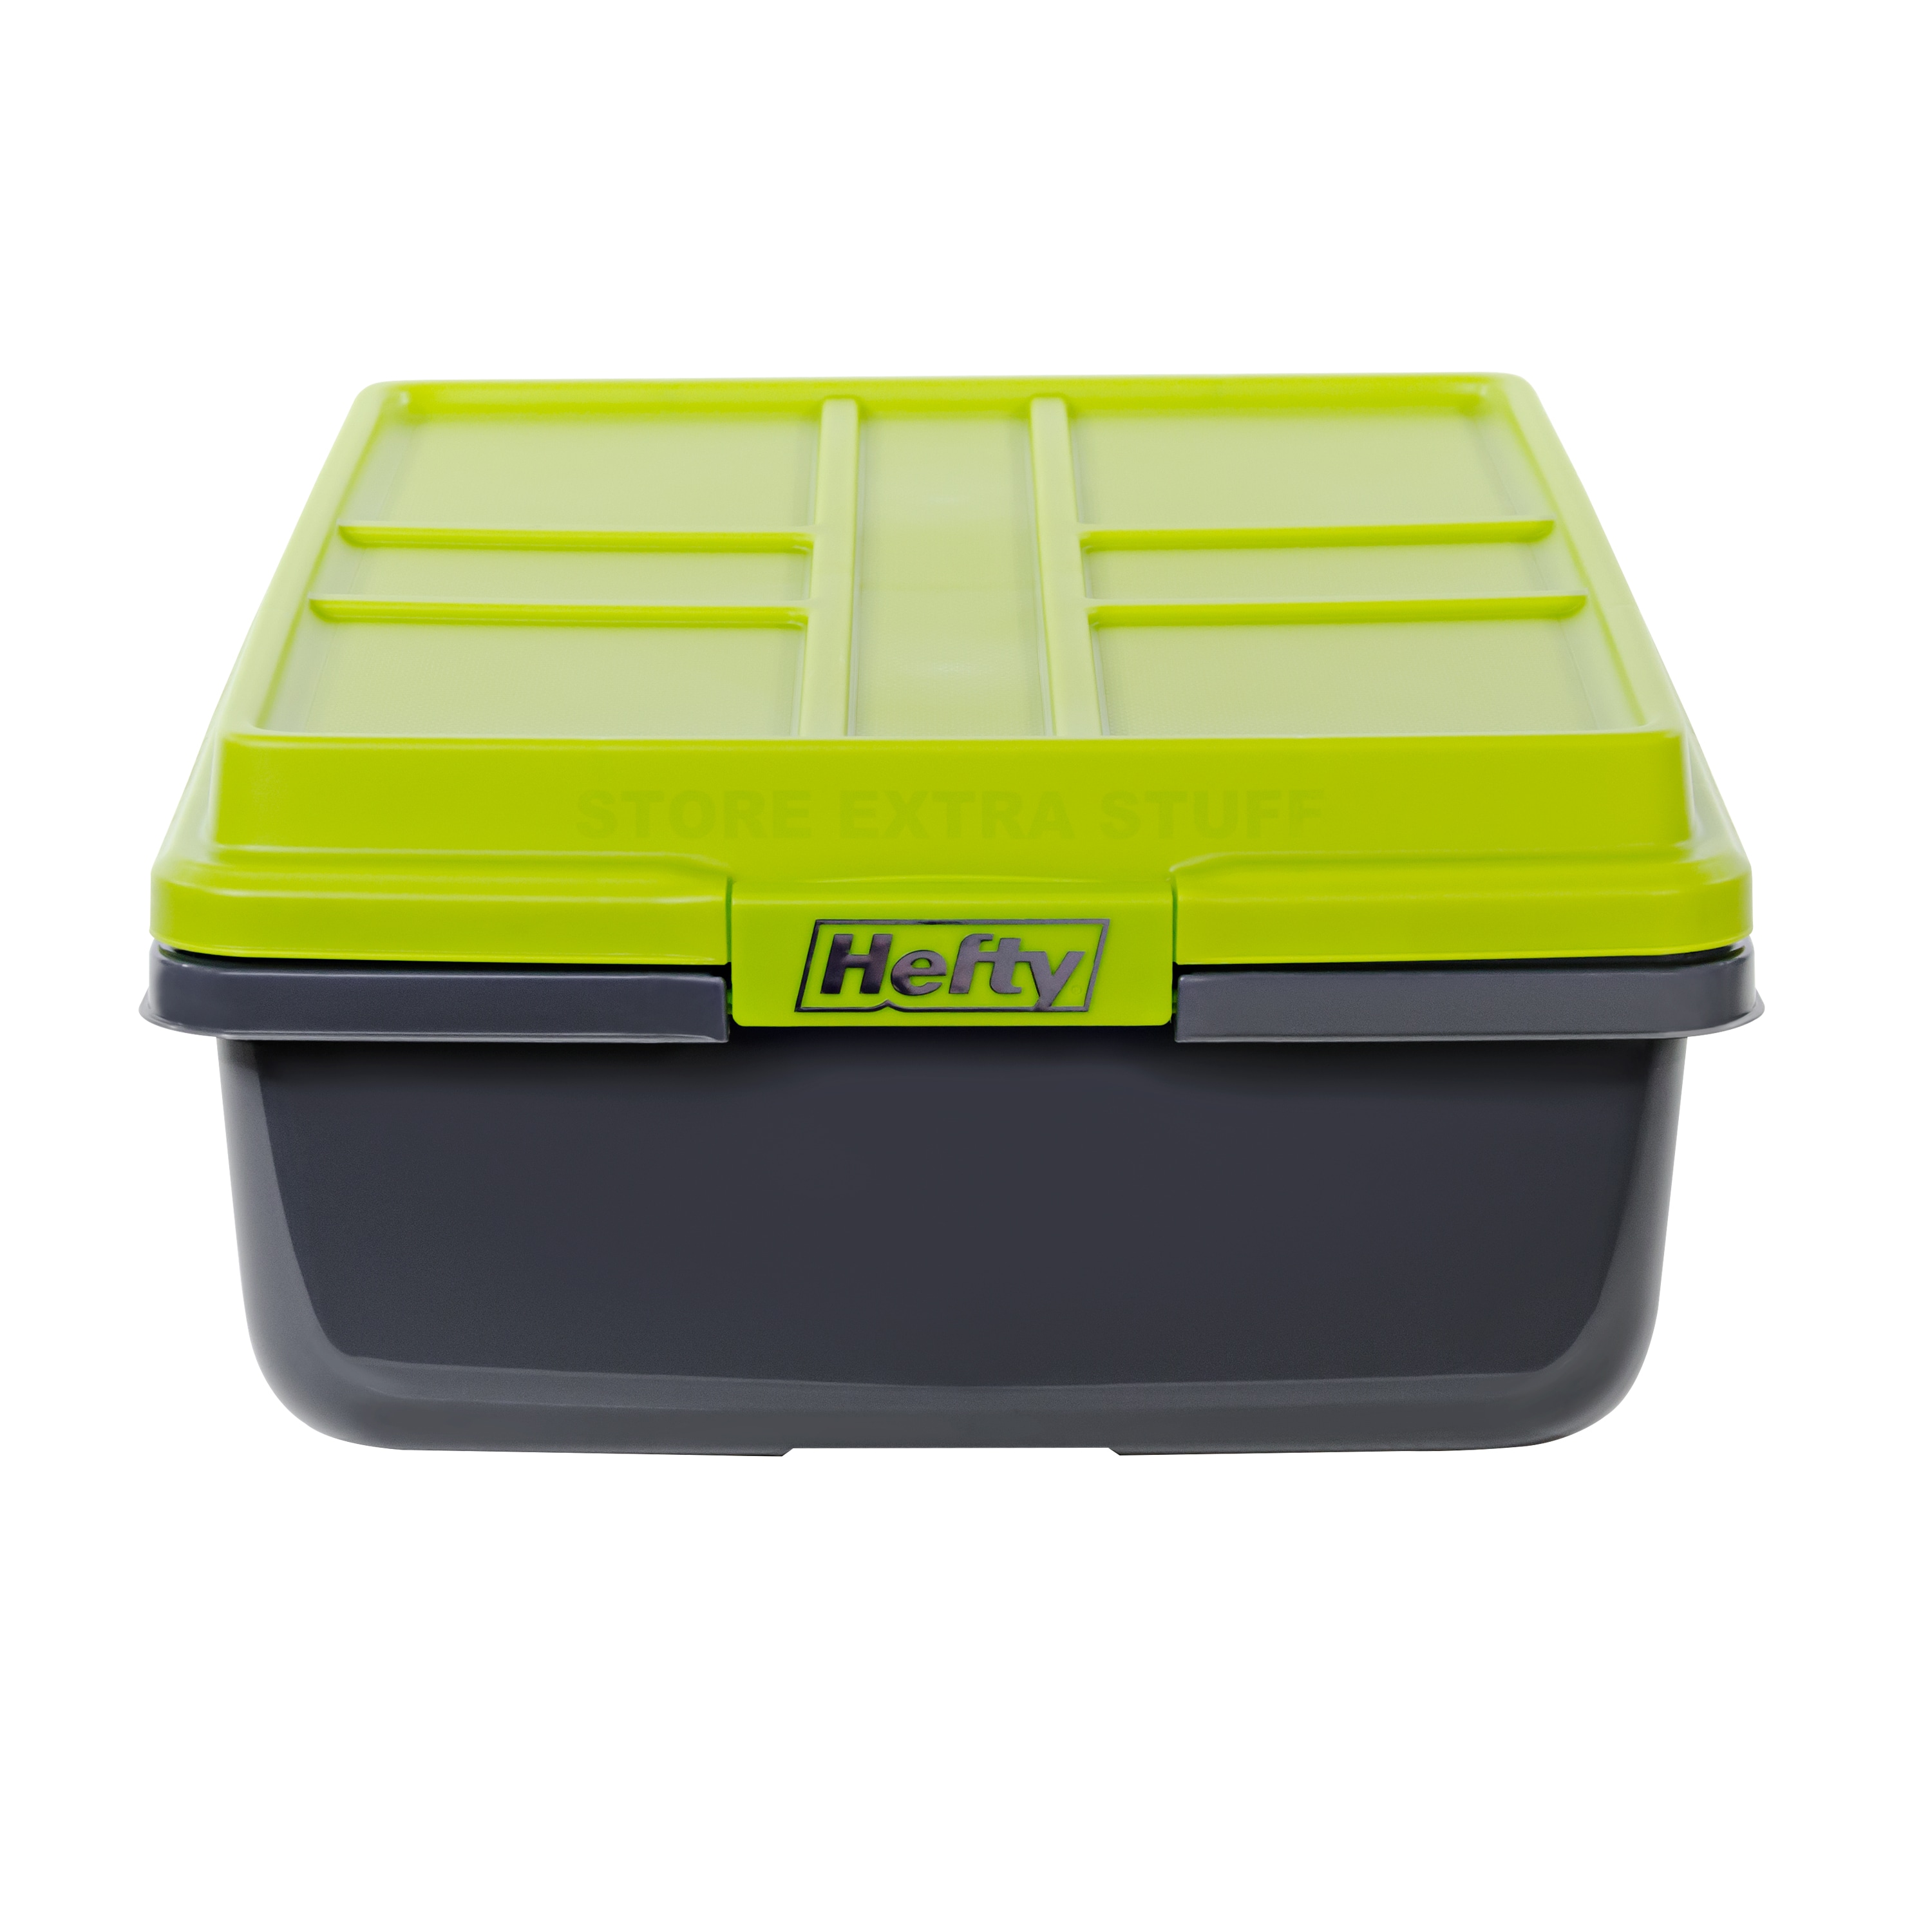 Hefty 18qt Plastic Storage Bin with HI-RISE Stackable Lid